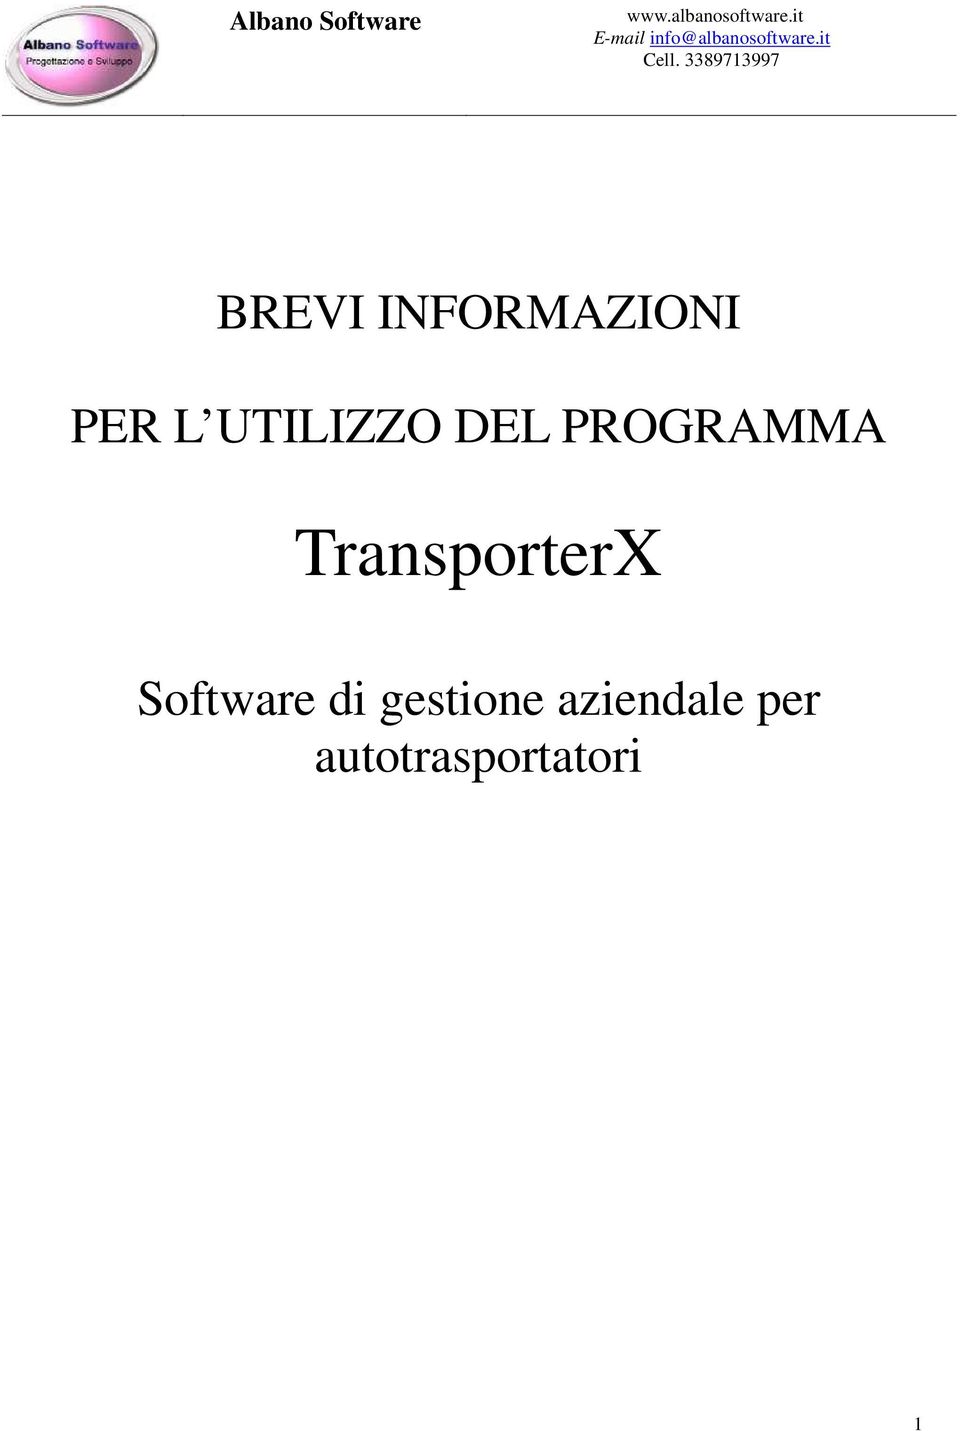 TransporterX Software di